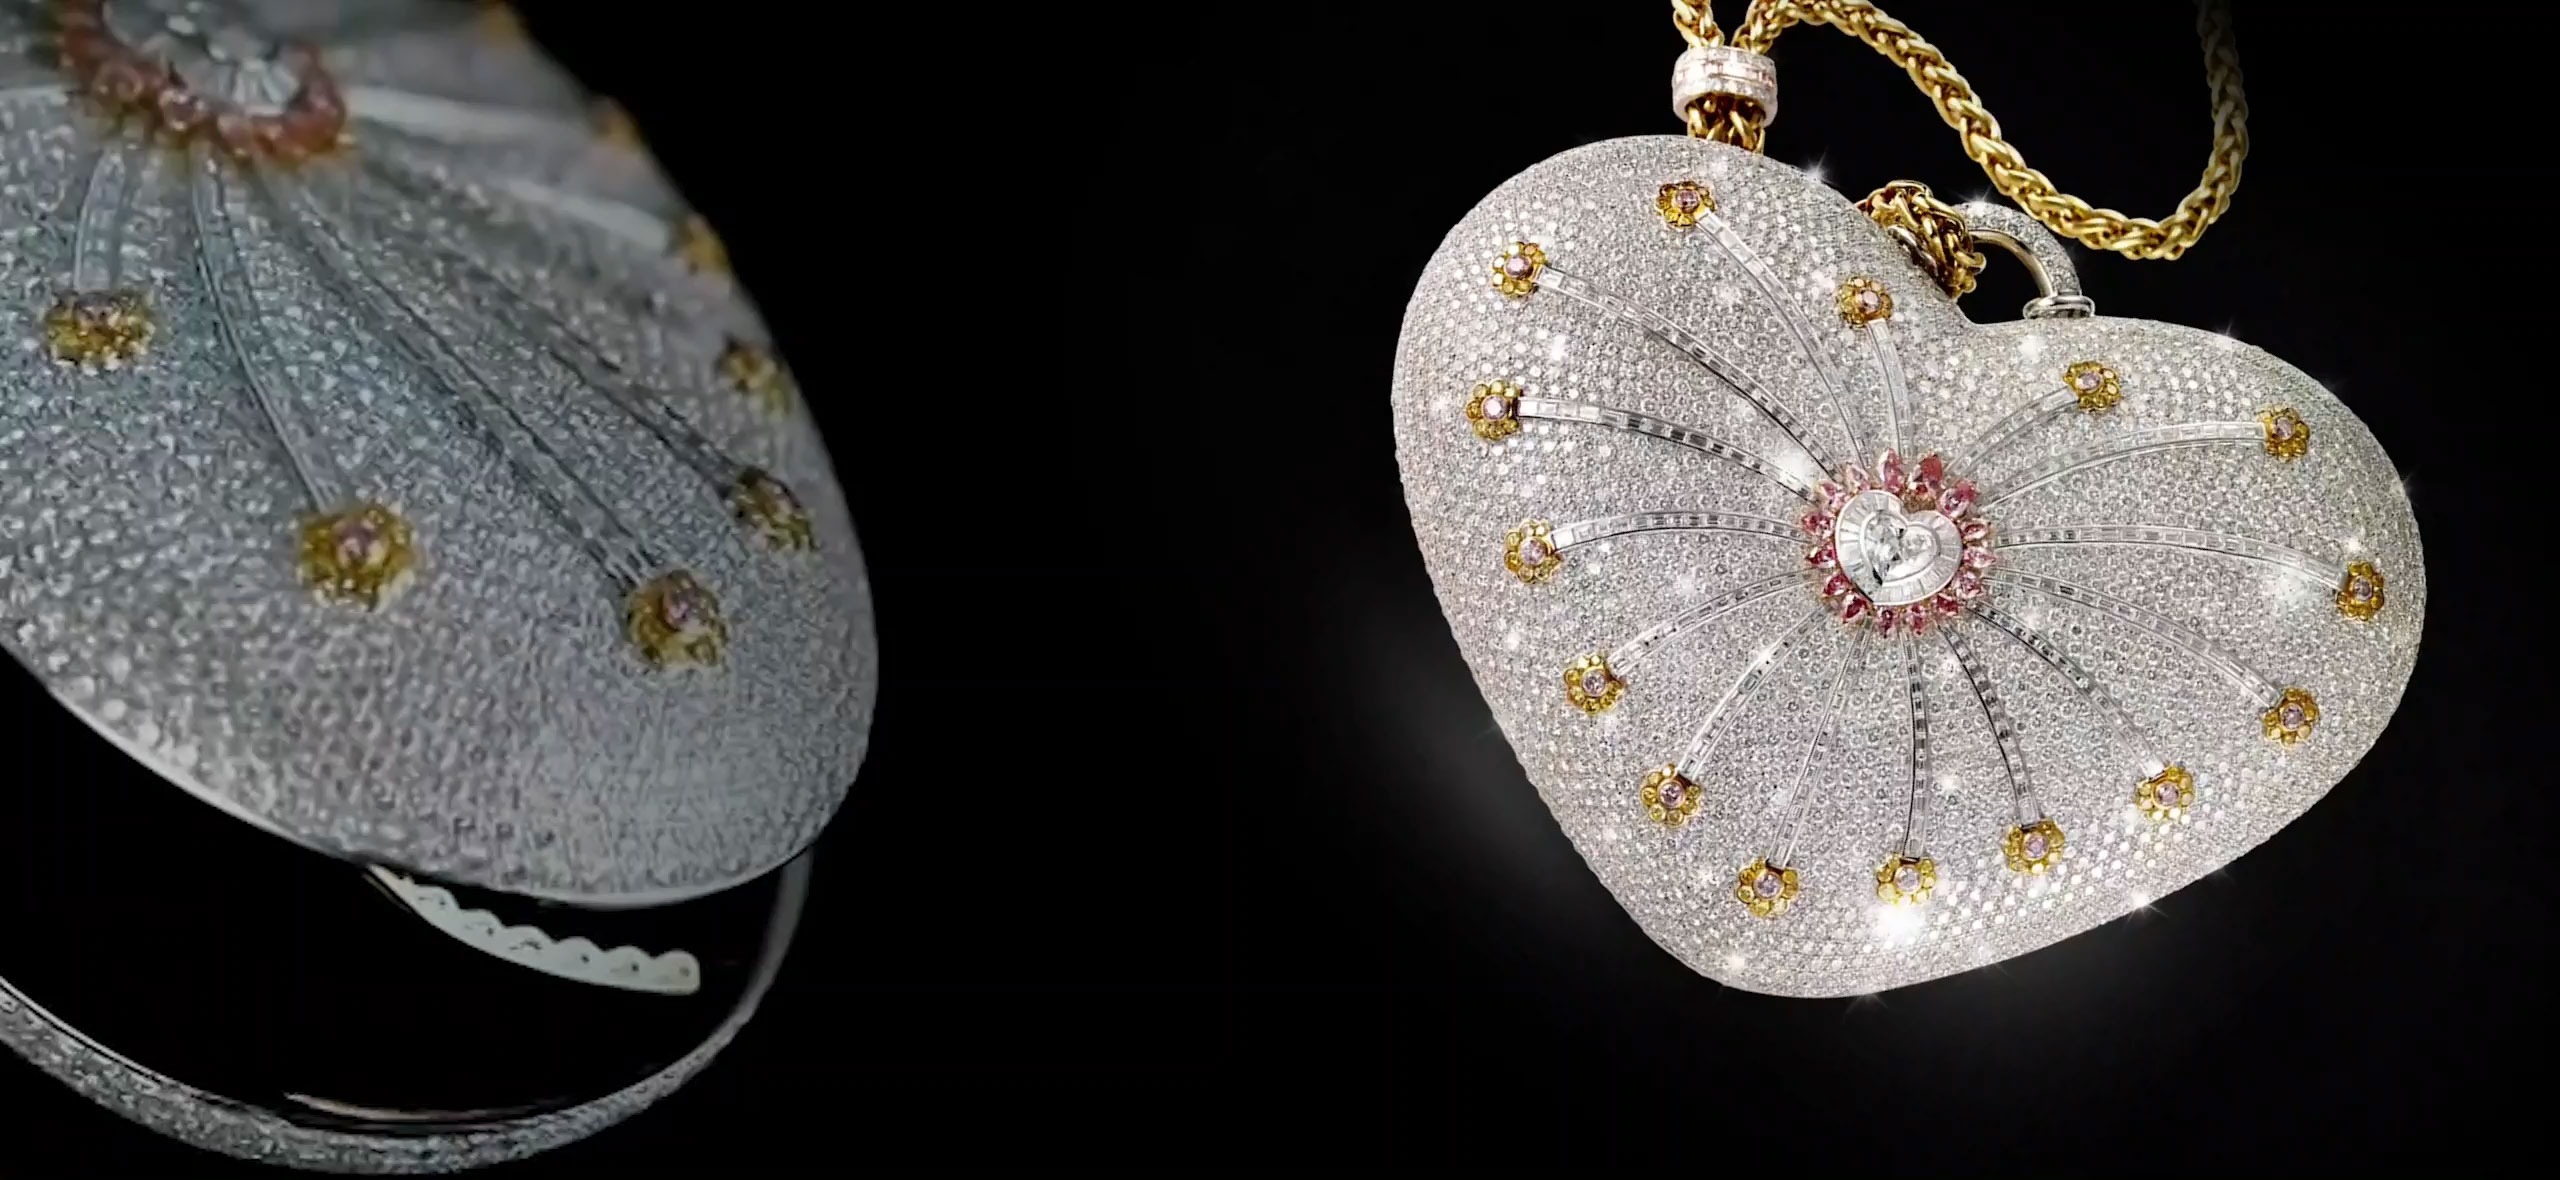 10 Most Expensive Handbag Brands- 1001 Nights Diamond Purse